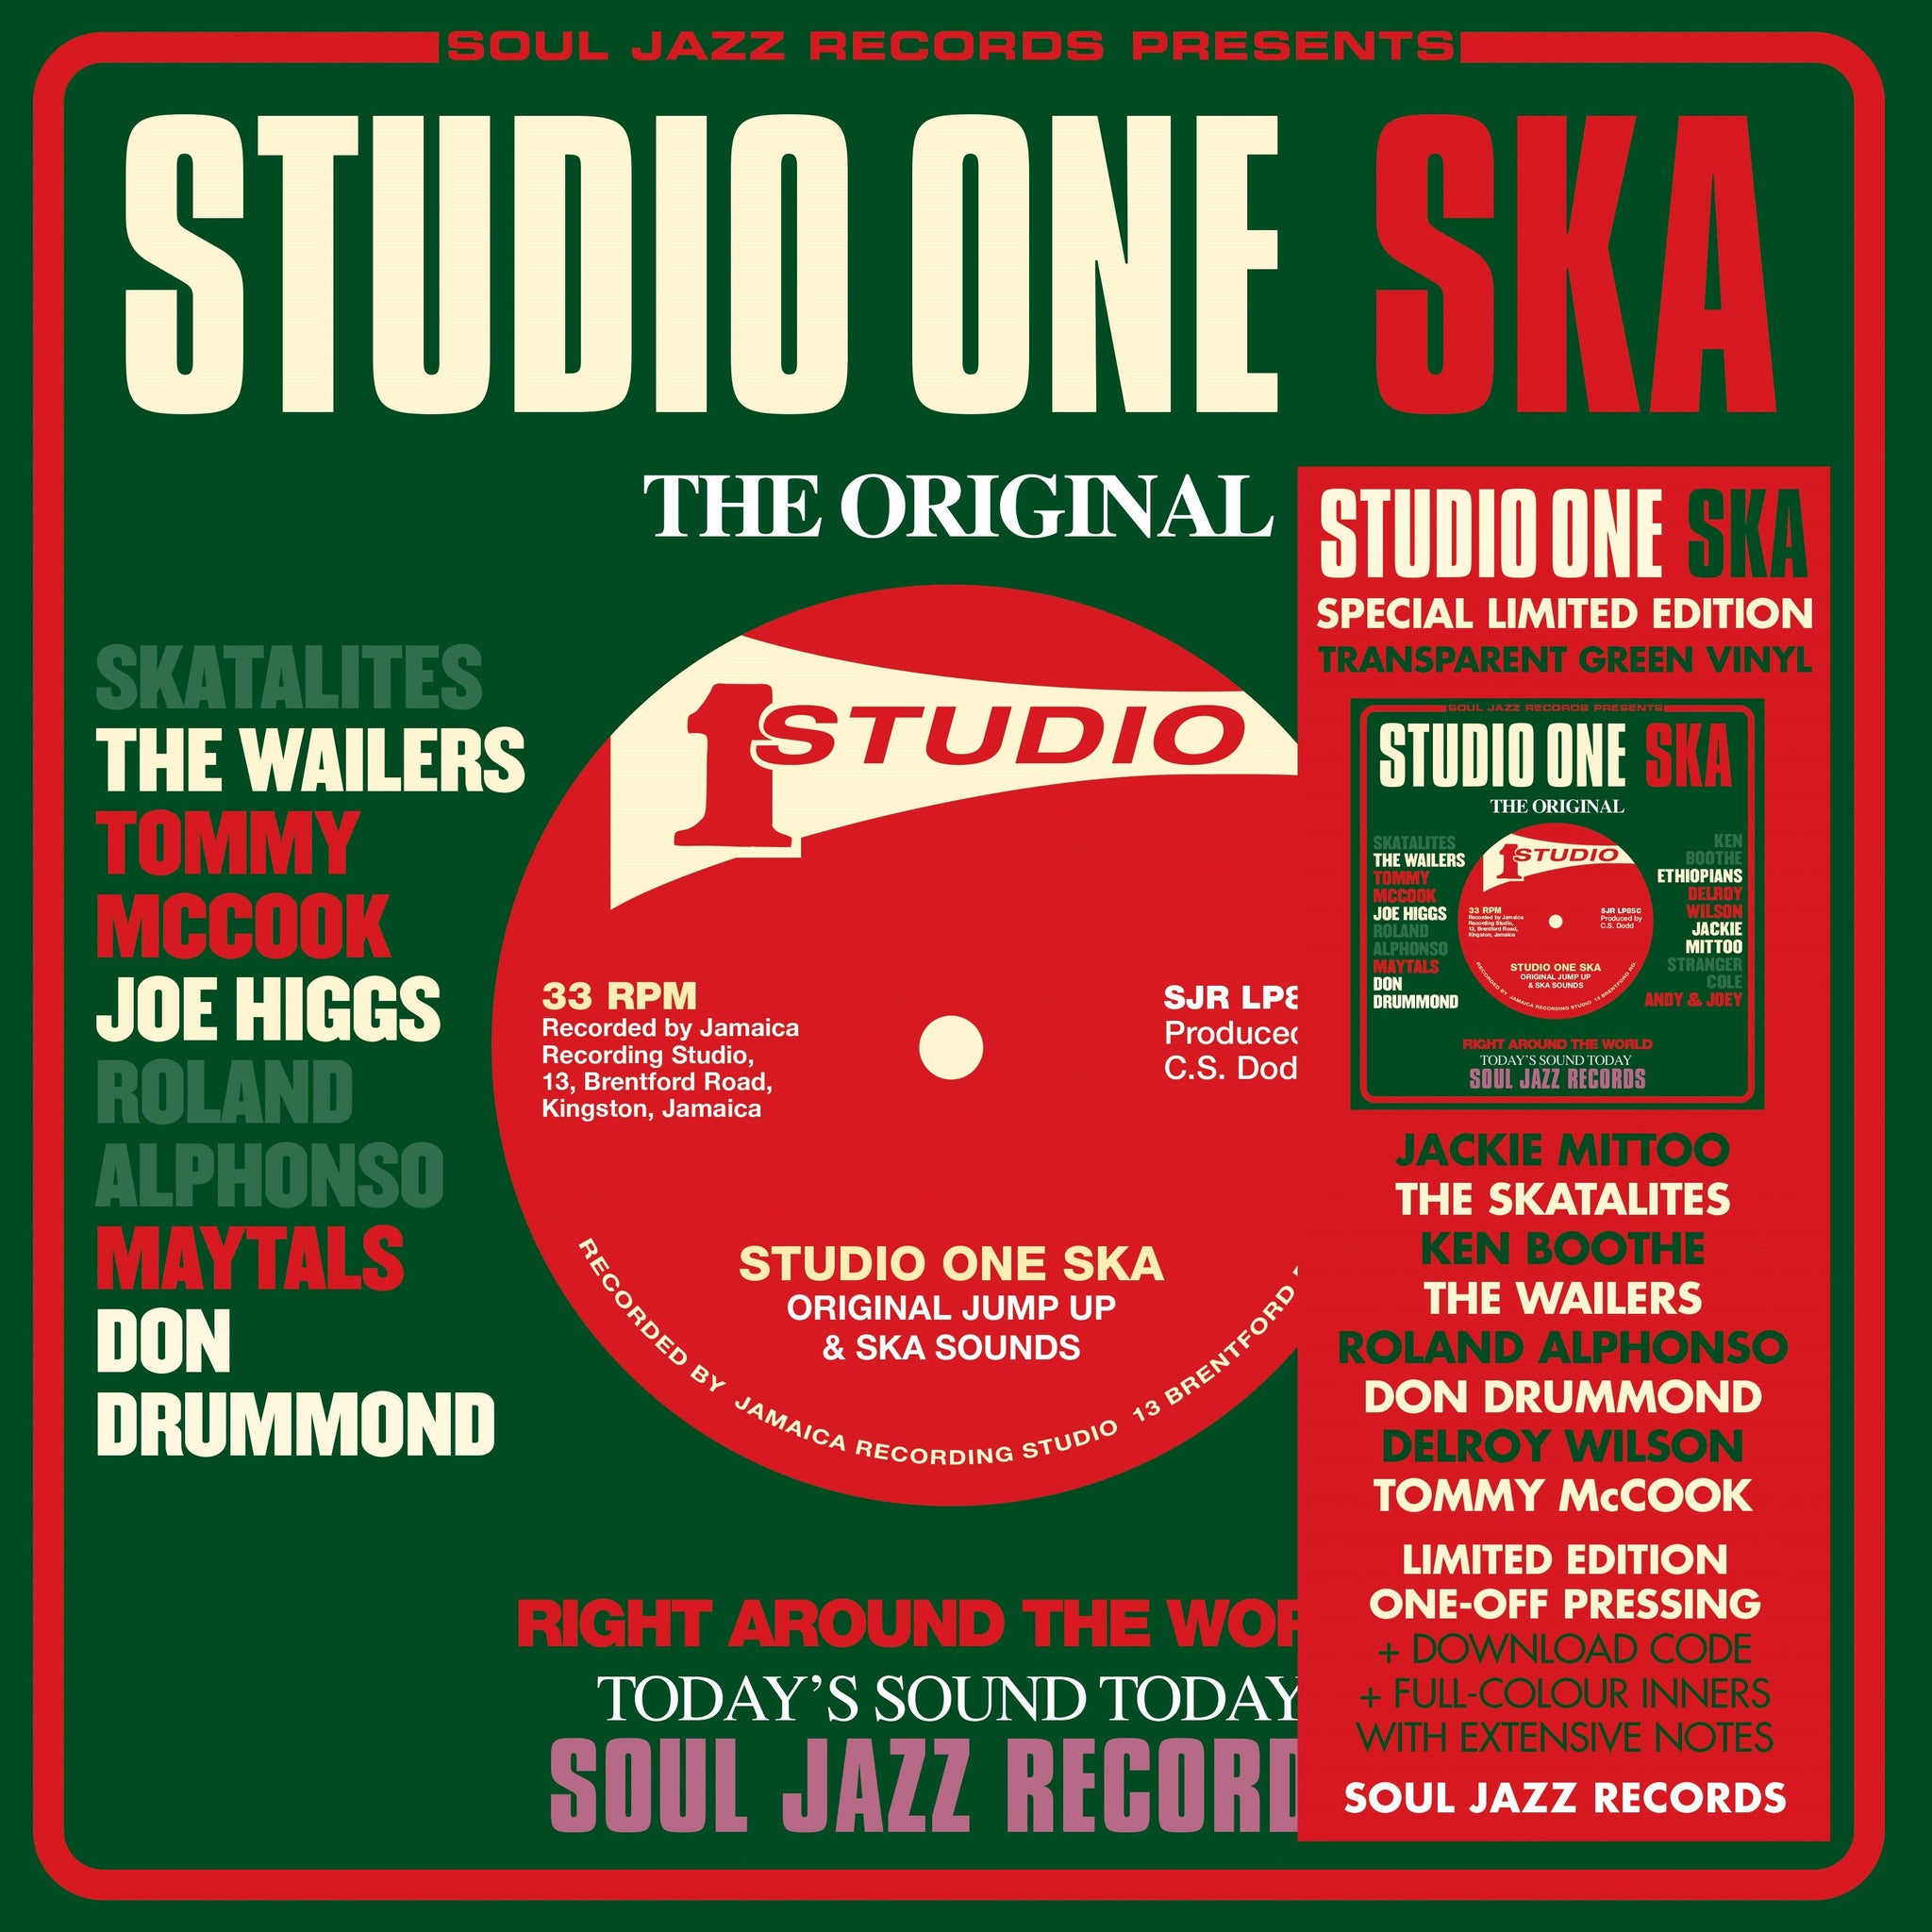 VARIOUS - Soul Jazz Records Presents: Studio One Ska 20th Anniversary Edition - 2LP - Green Vinyl [RSD23]